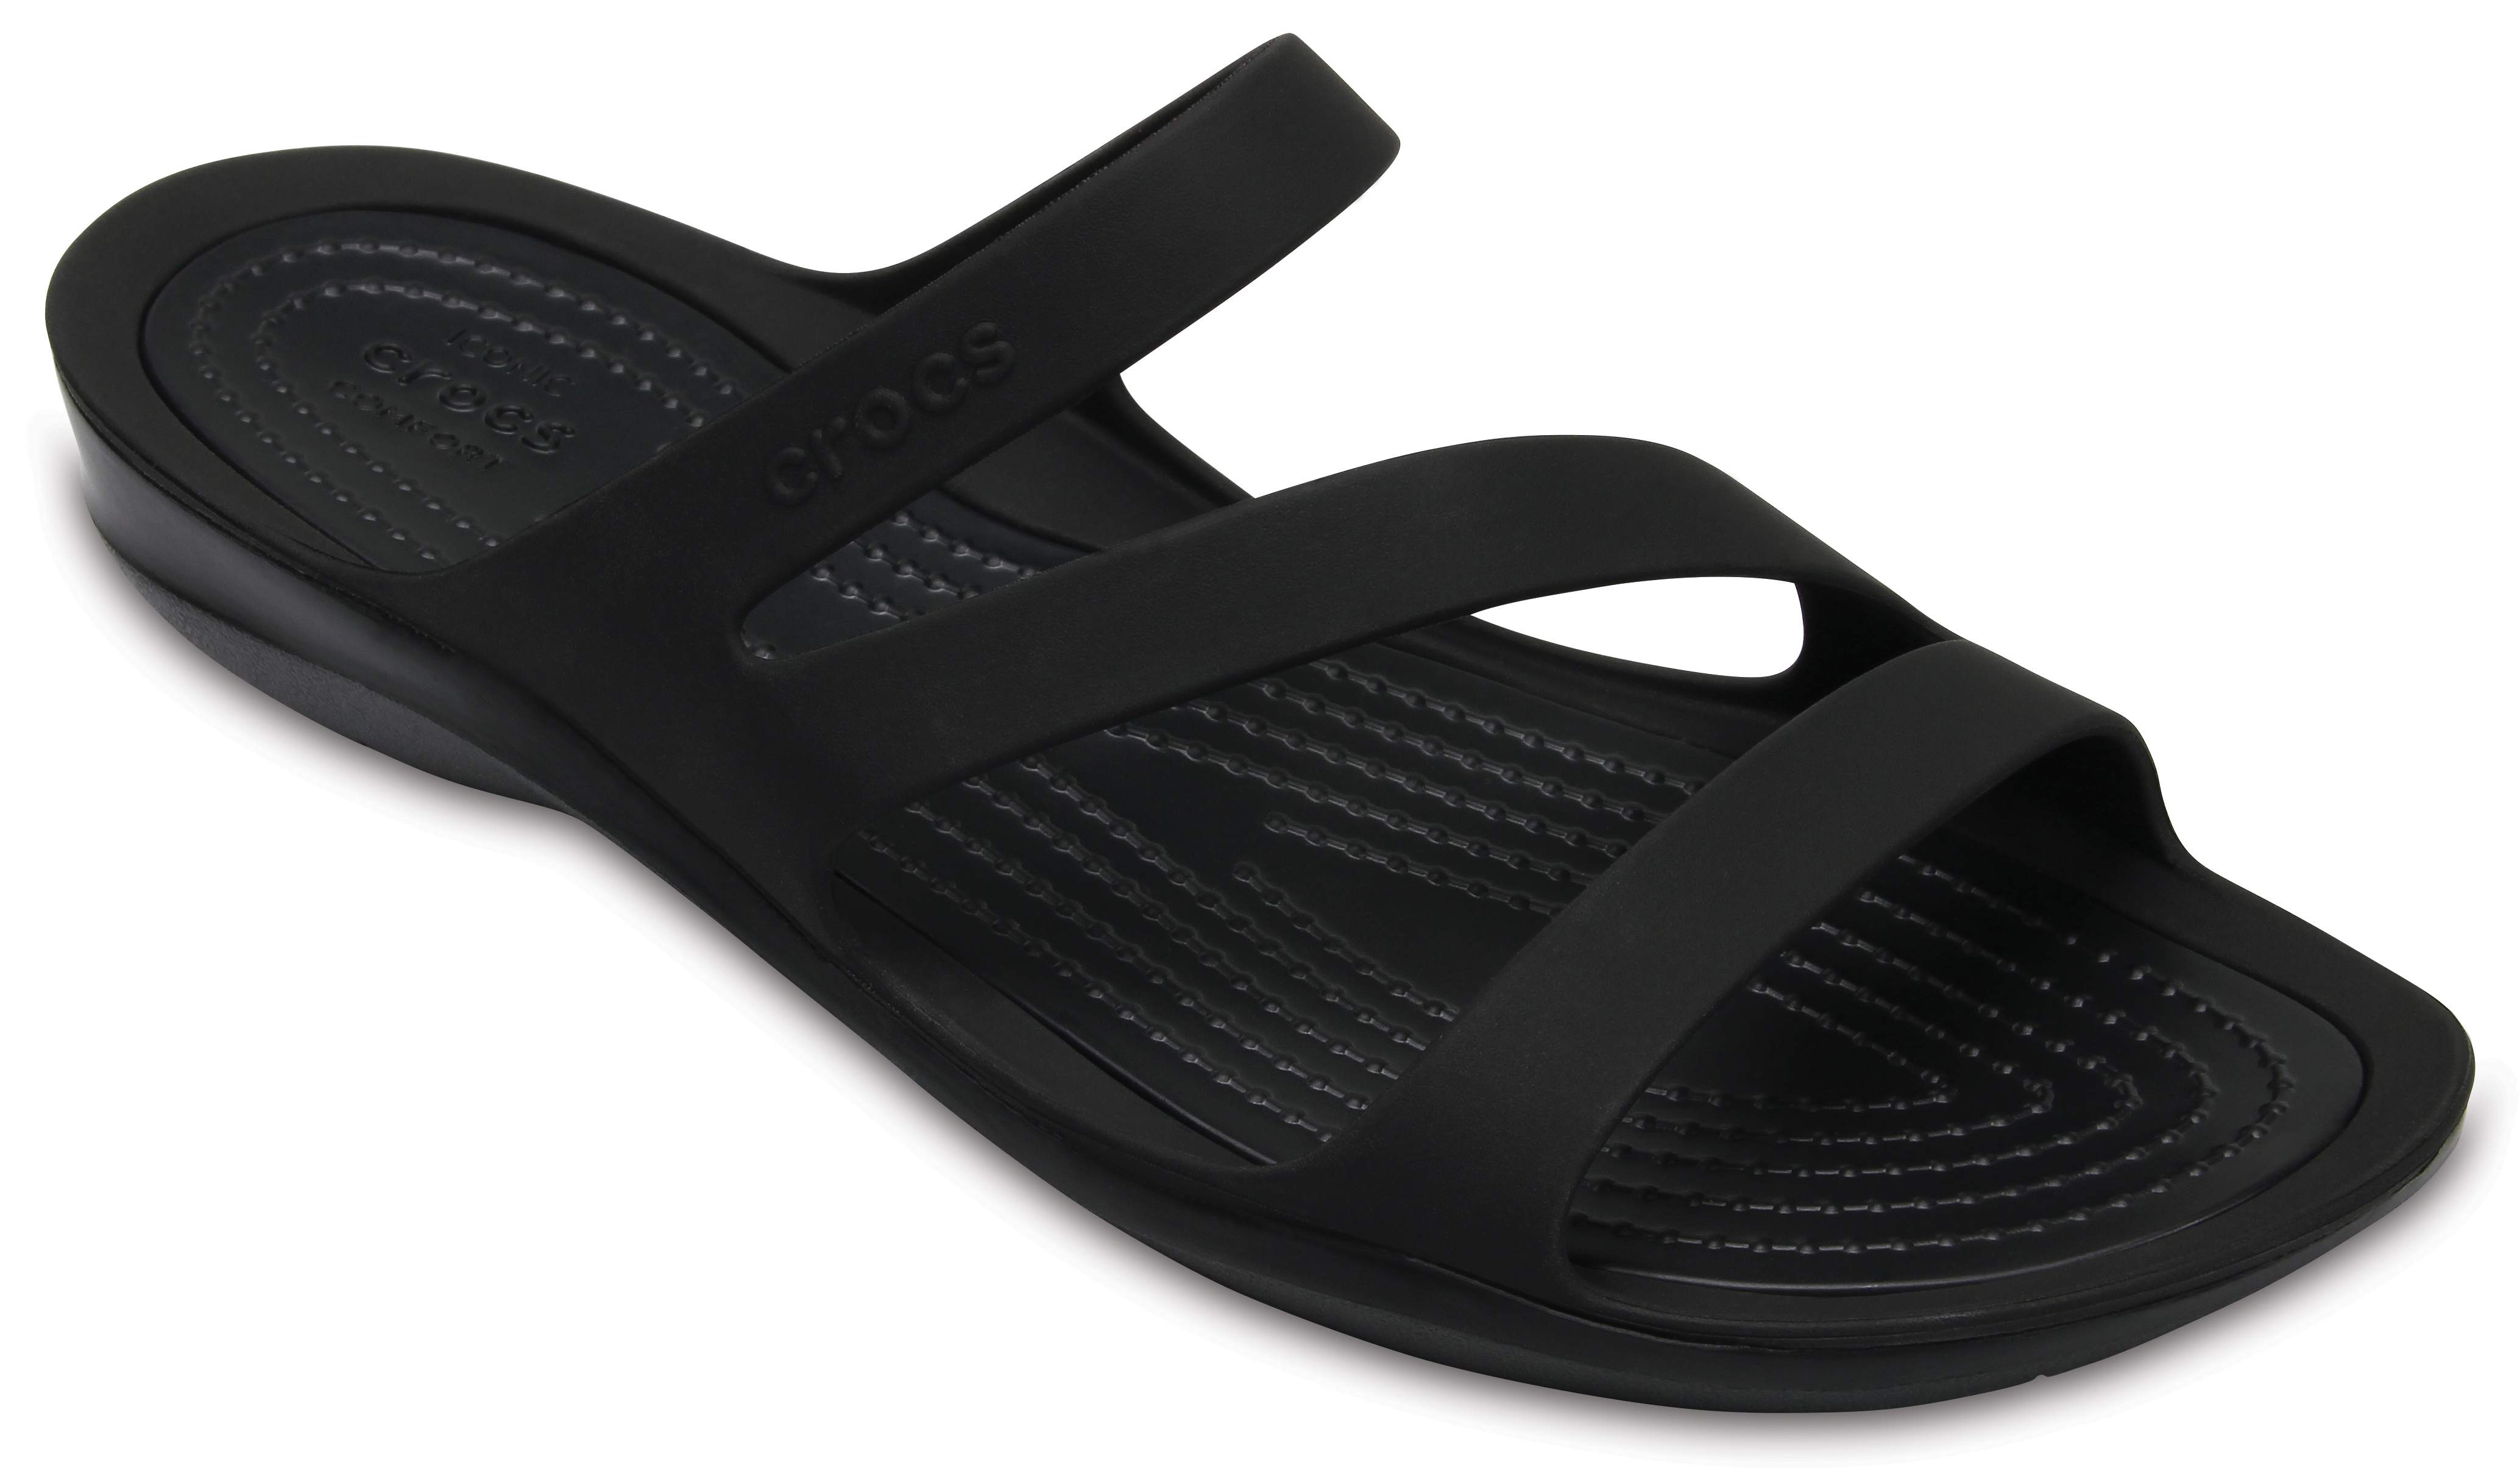 crocs black sandal